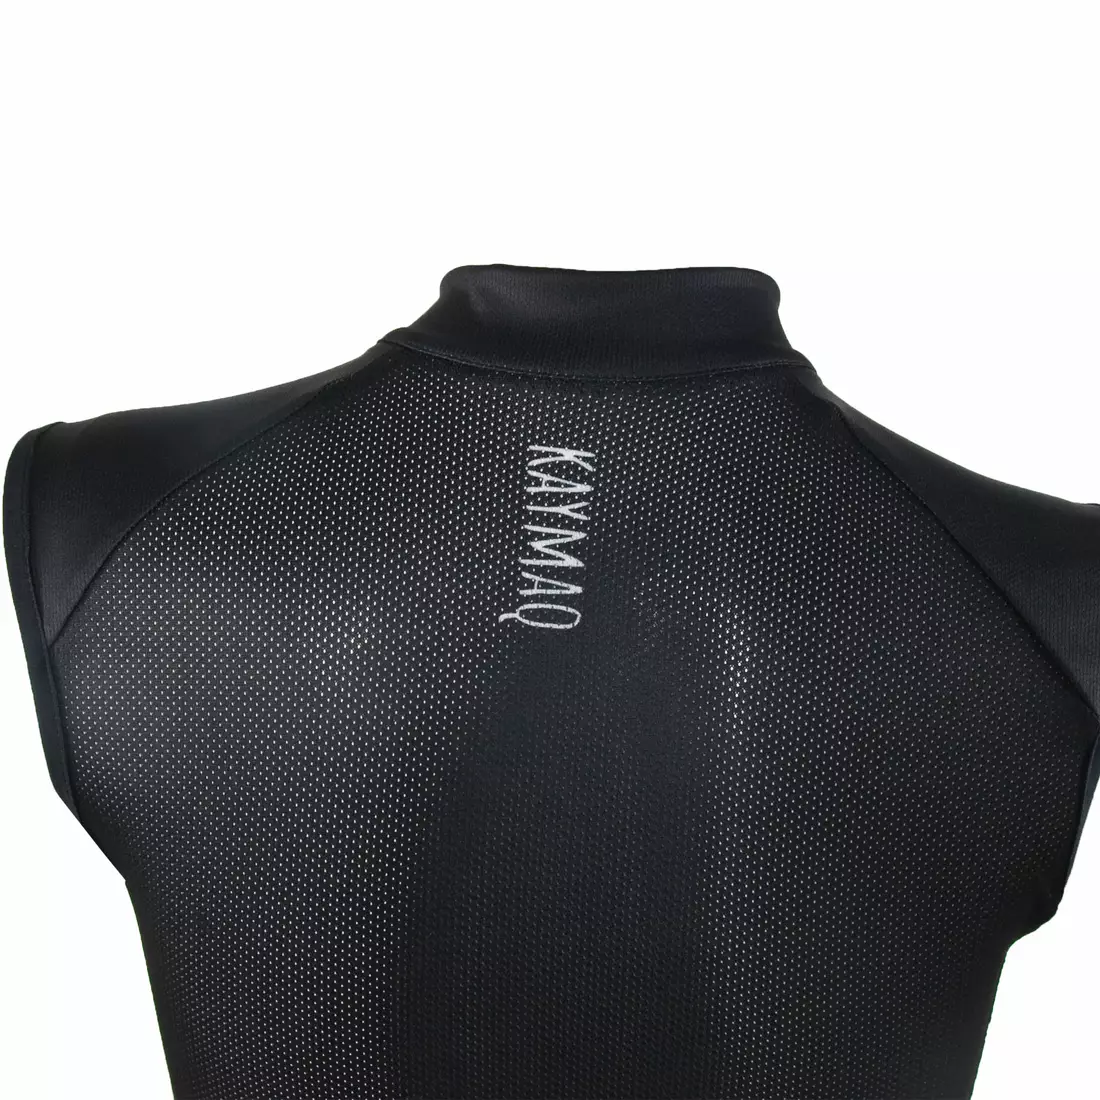 KAYMAQ SLEEVELESS ärmelloses Fahrrad-T-Shirt für Frauen 01.218, schwarz